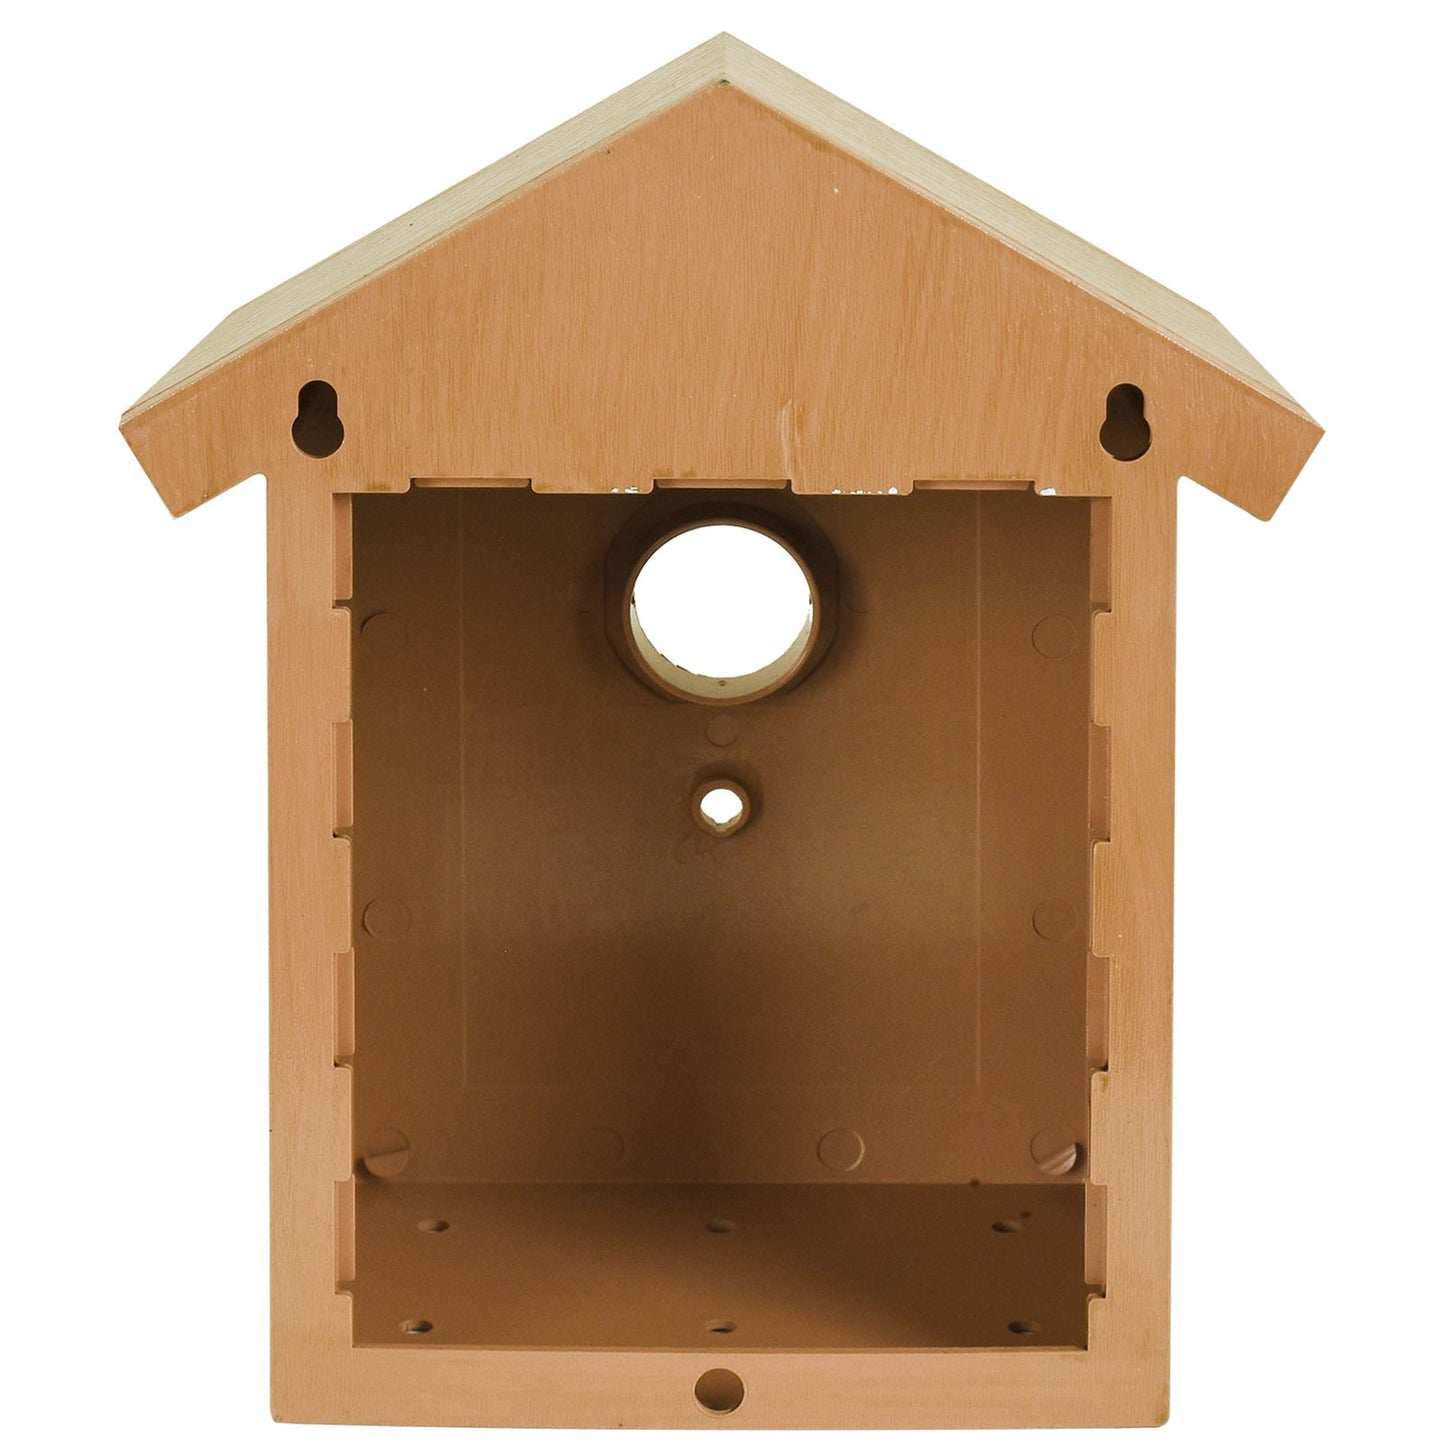 Wooden Bird Nesting House For Wild Birds